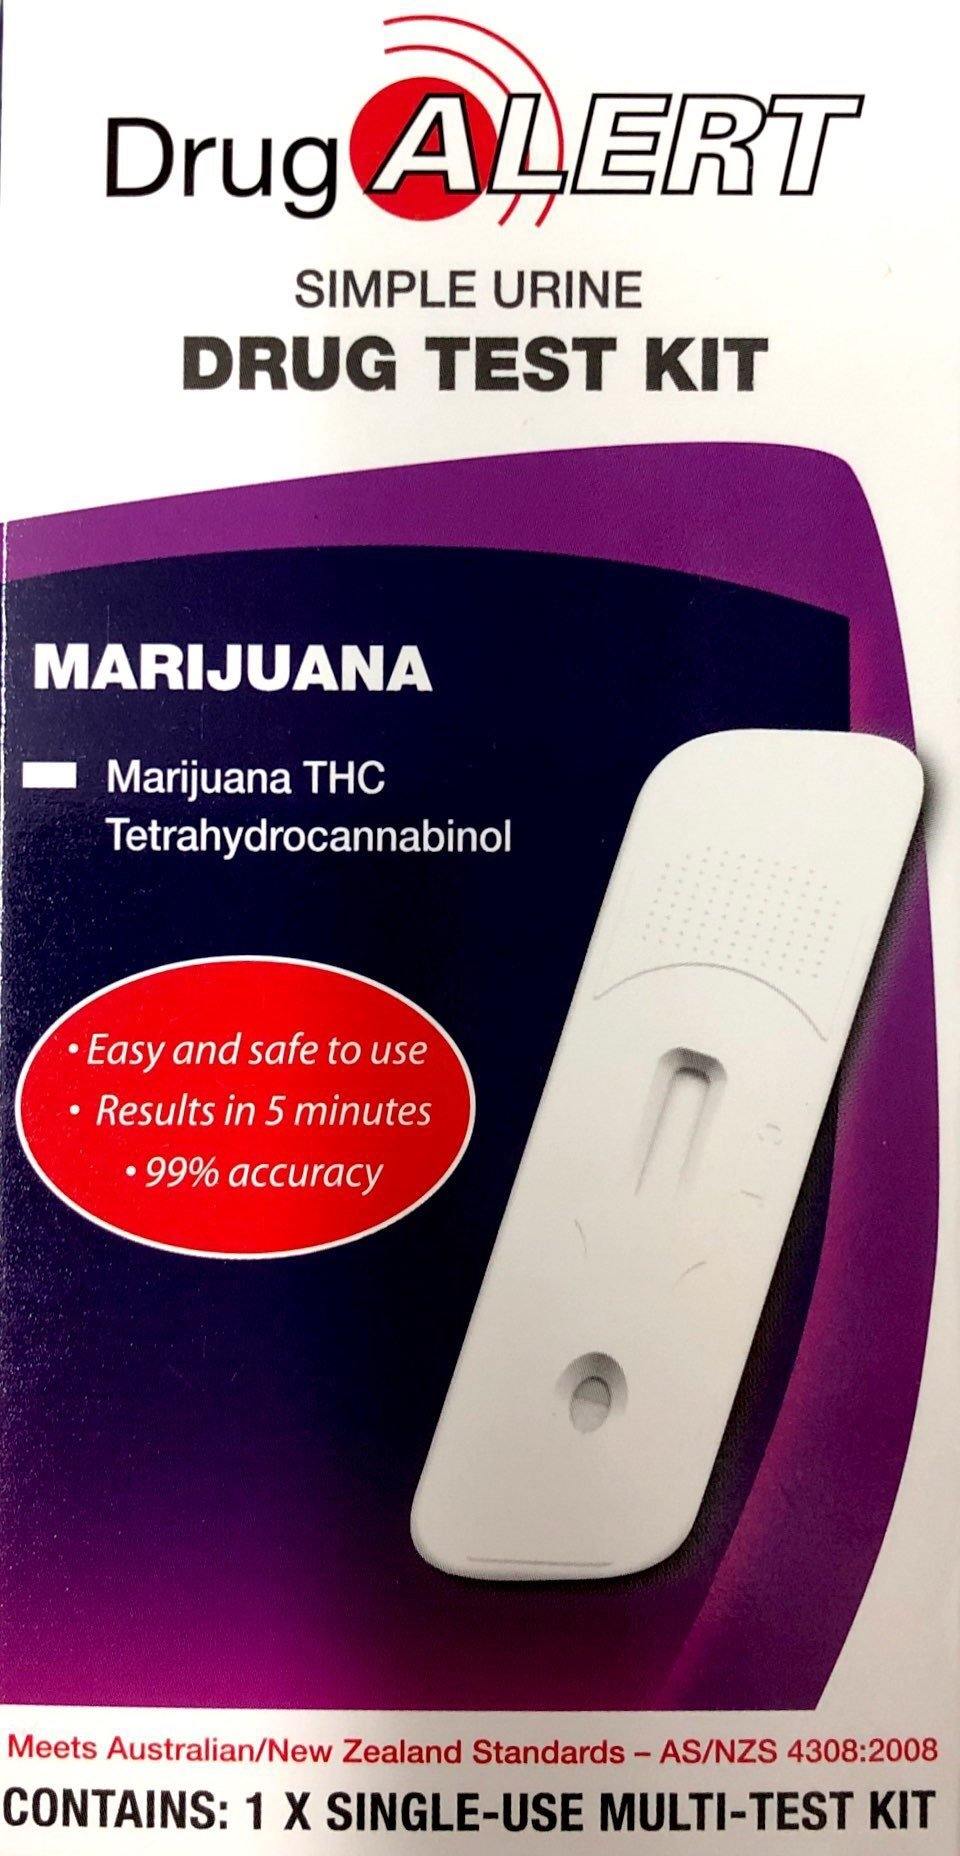 Drug Alert Urine 1 Test kit for Marijuana THC Tetrahydrocannabinol - DominionRoadPharmacy